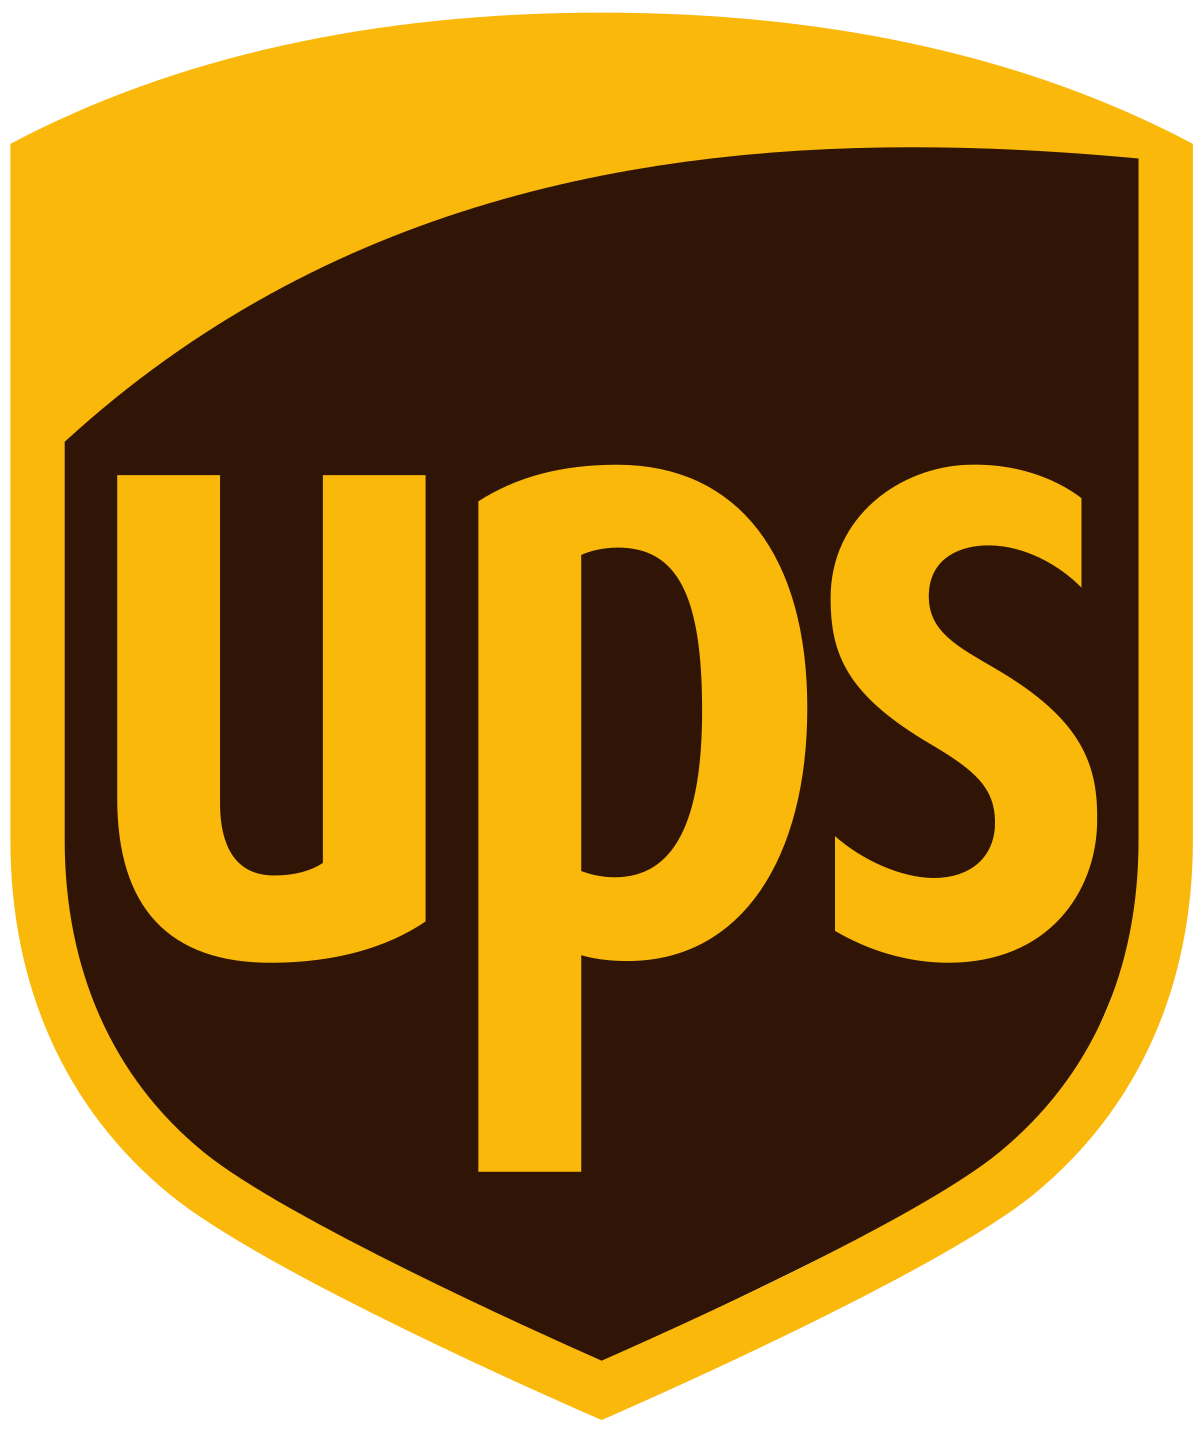 Standard UPS Shipping